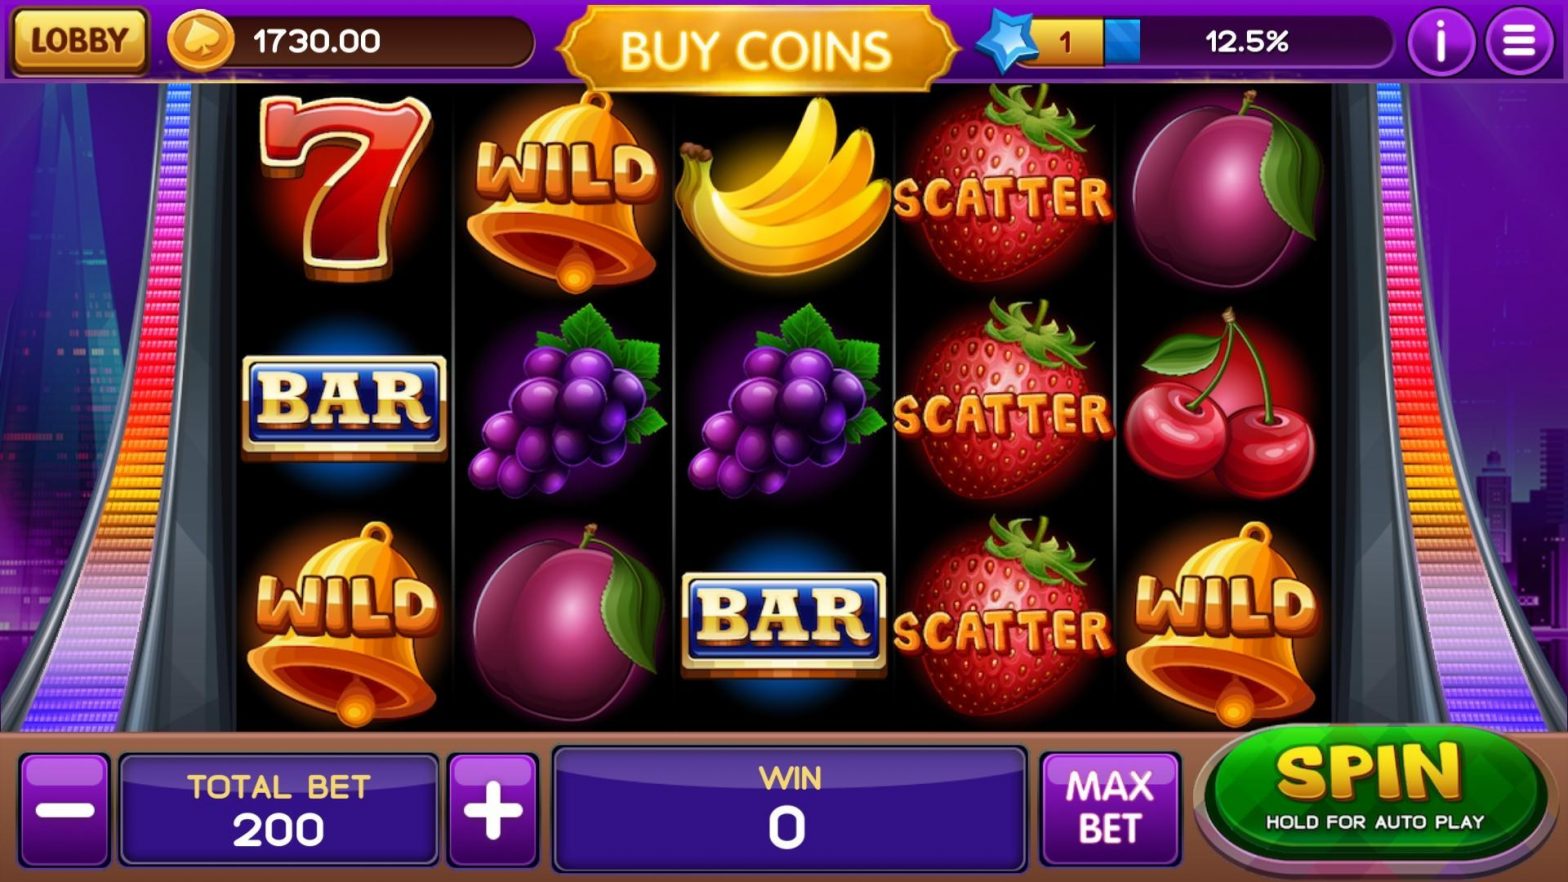 Gambling Strategies for Online Casinos